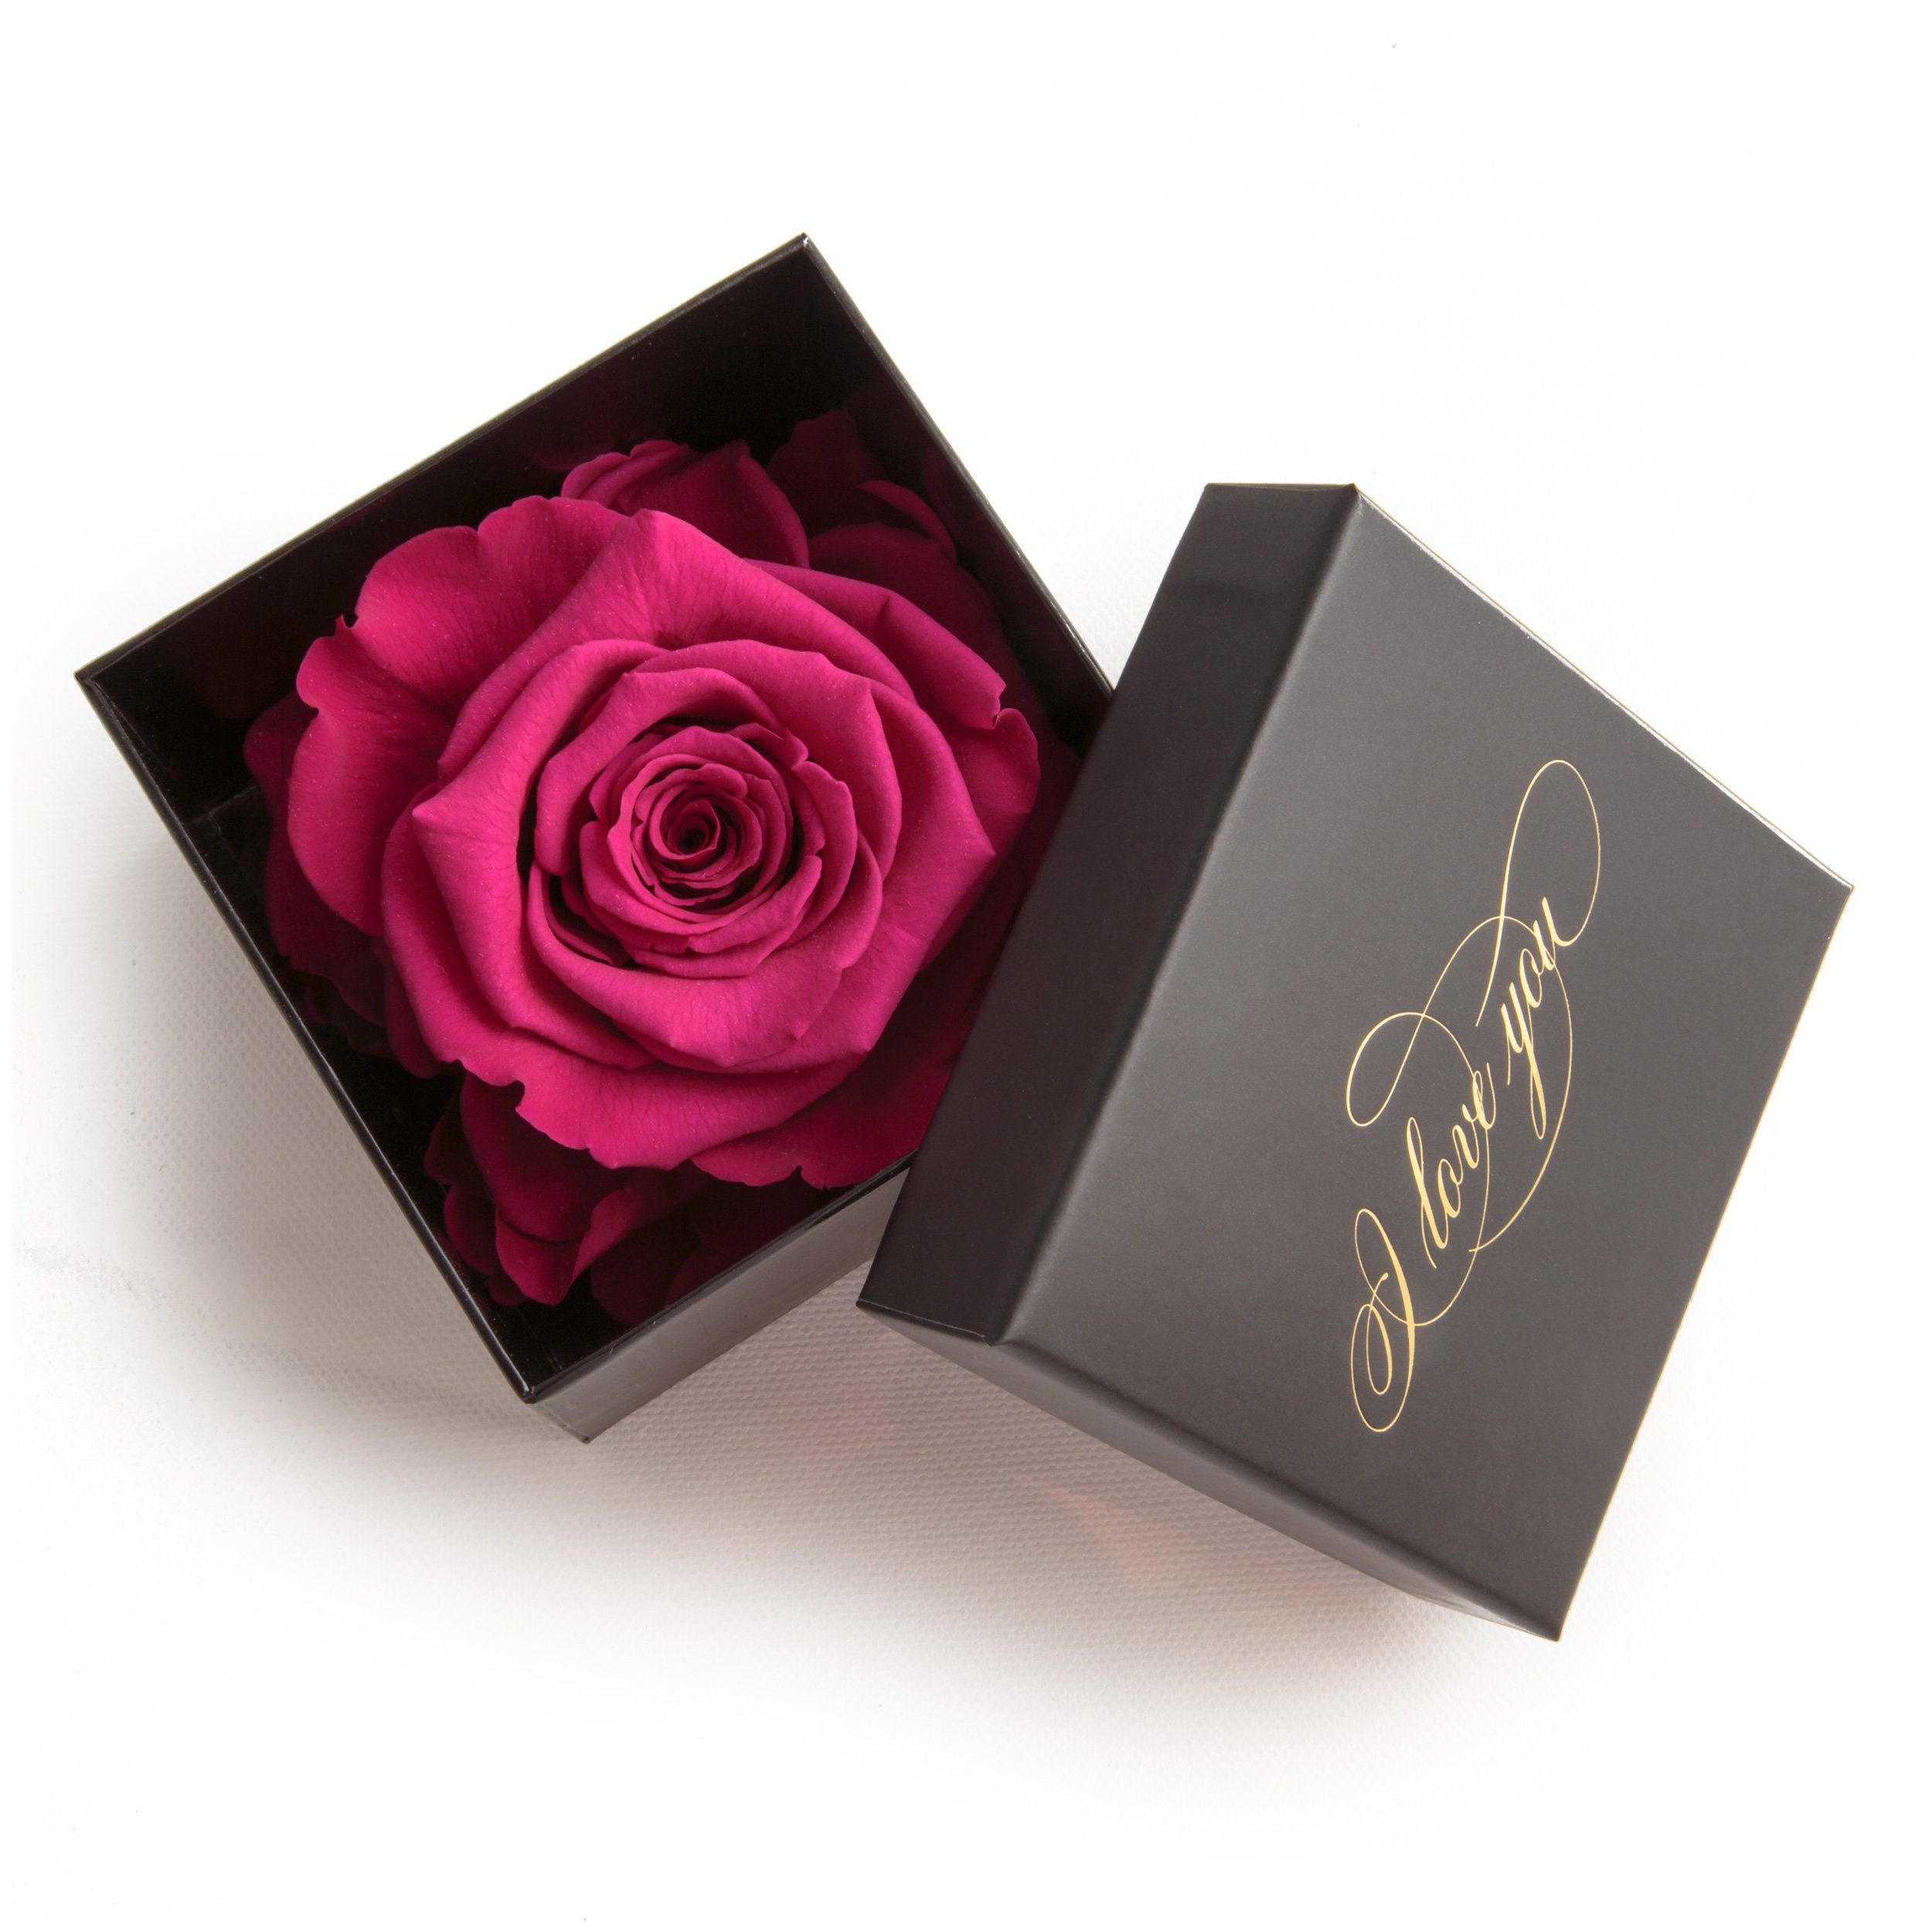 Liebesbeweis Geschenk 6 konserviert Echte Pink You I Heidelberg, Box Love Rose SCHULZ Idee Rose Rose, Infinity Höhe Kunstblume cm, ROSEMARIE